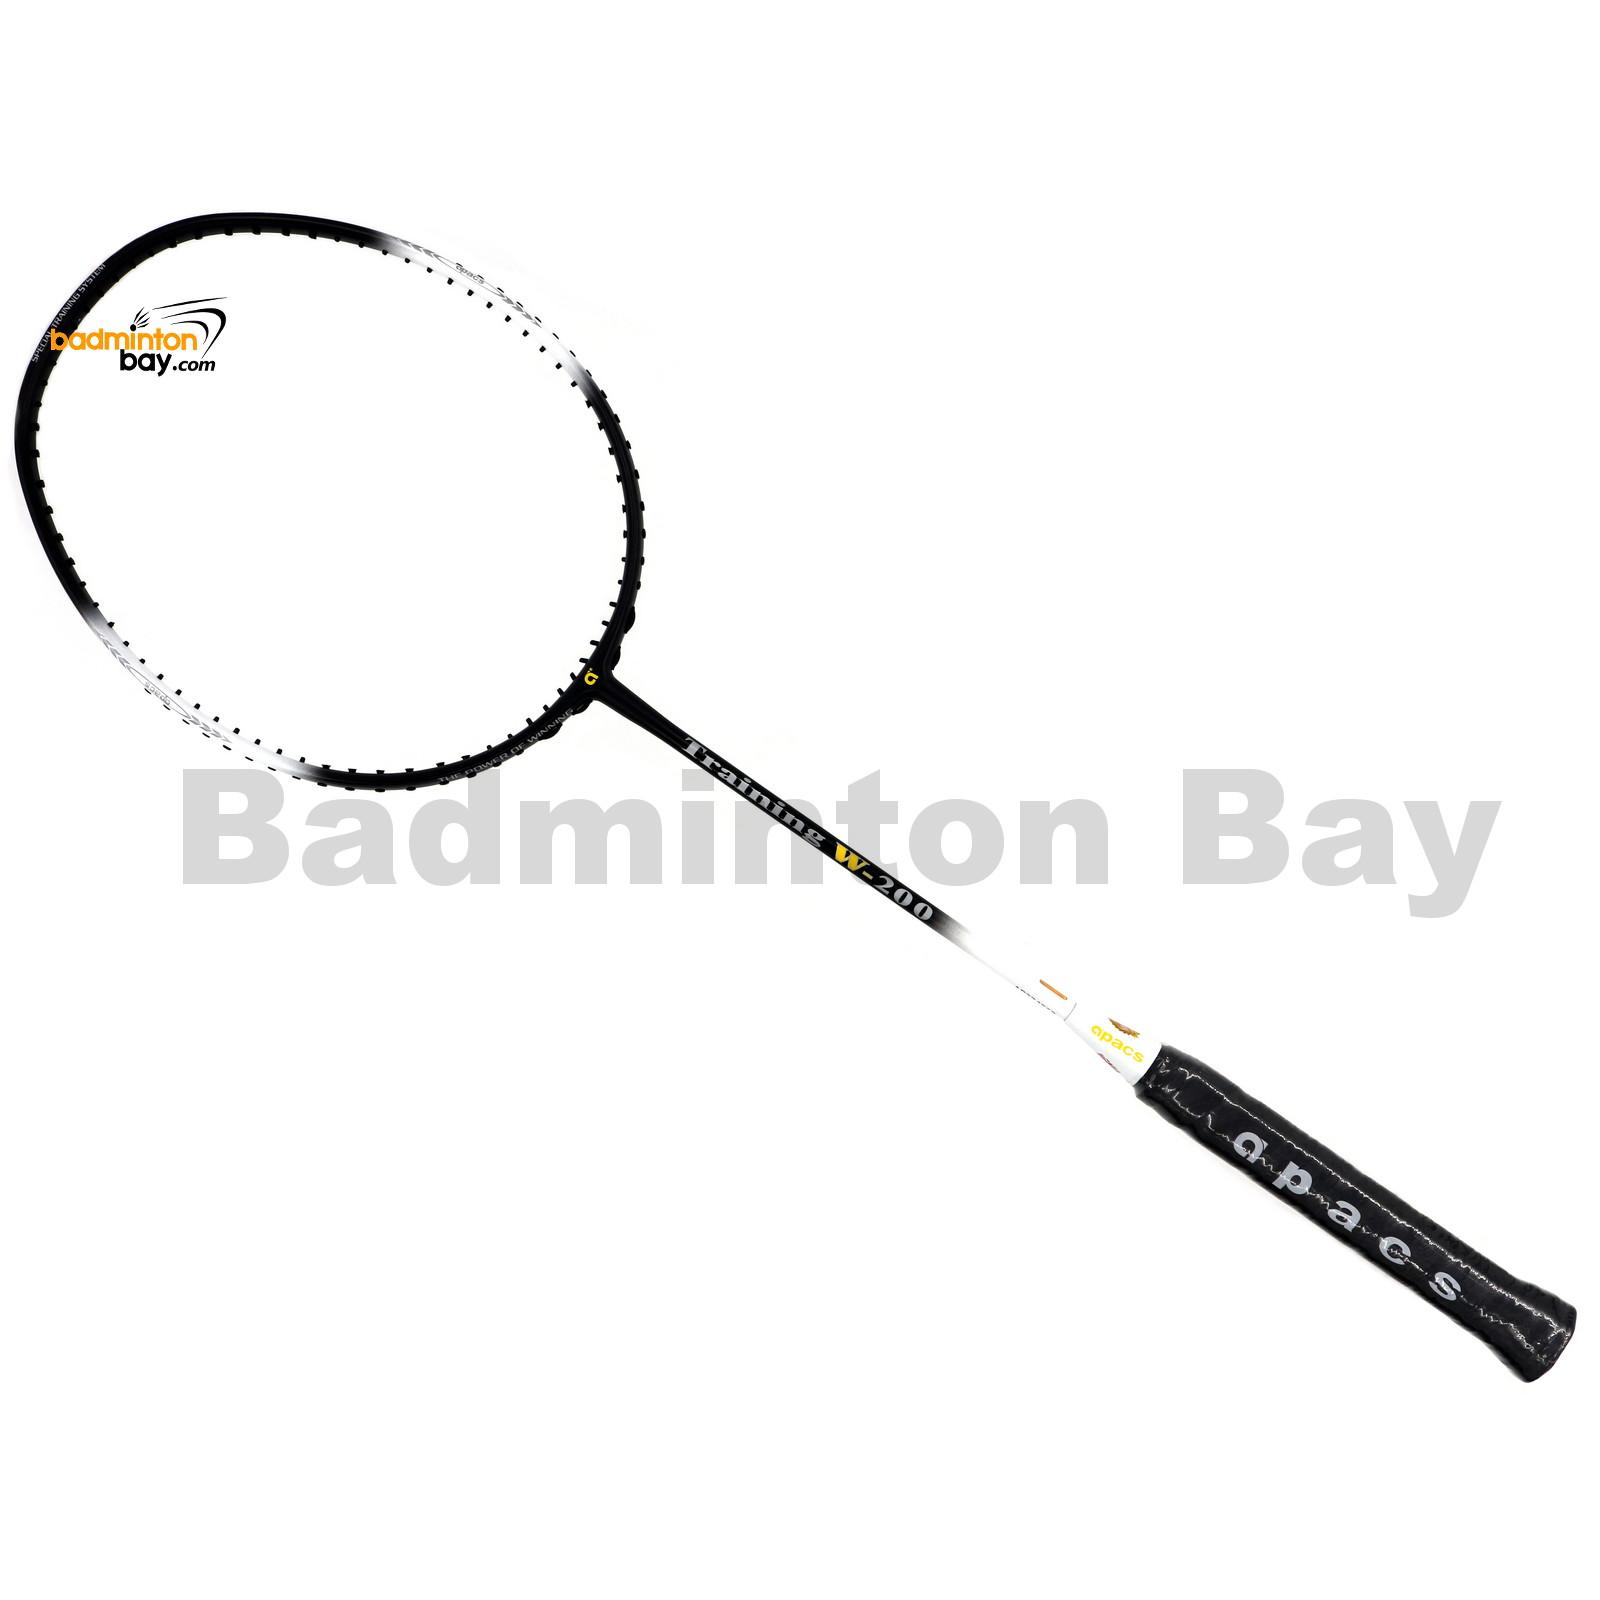 APACS Training W-200 Badminton Racket Free String and Grip